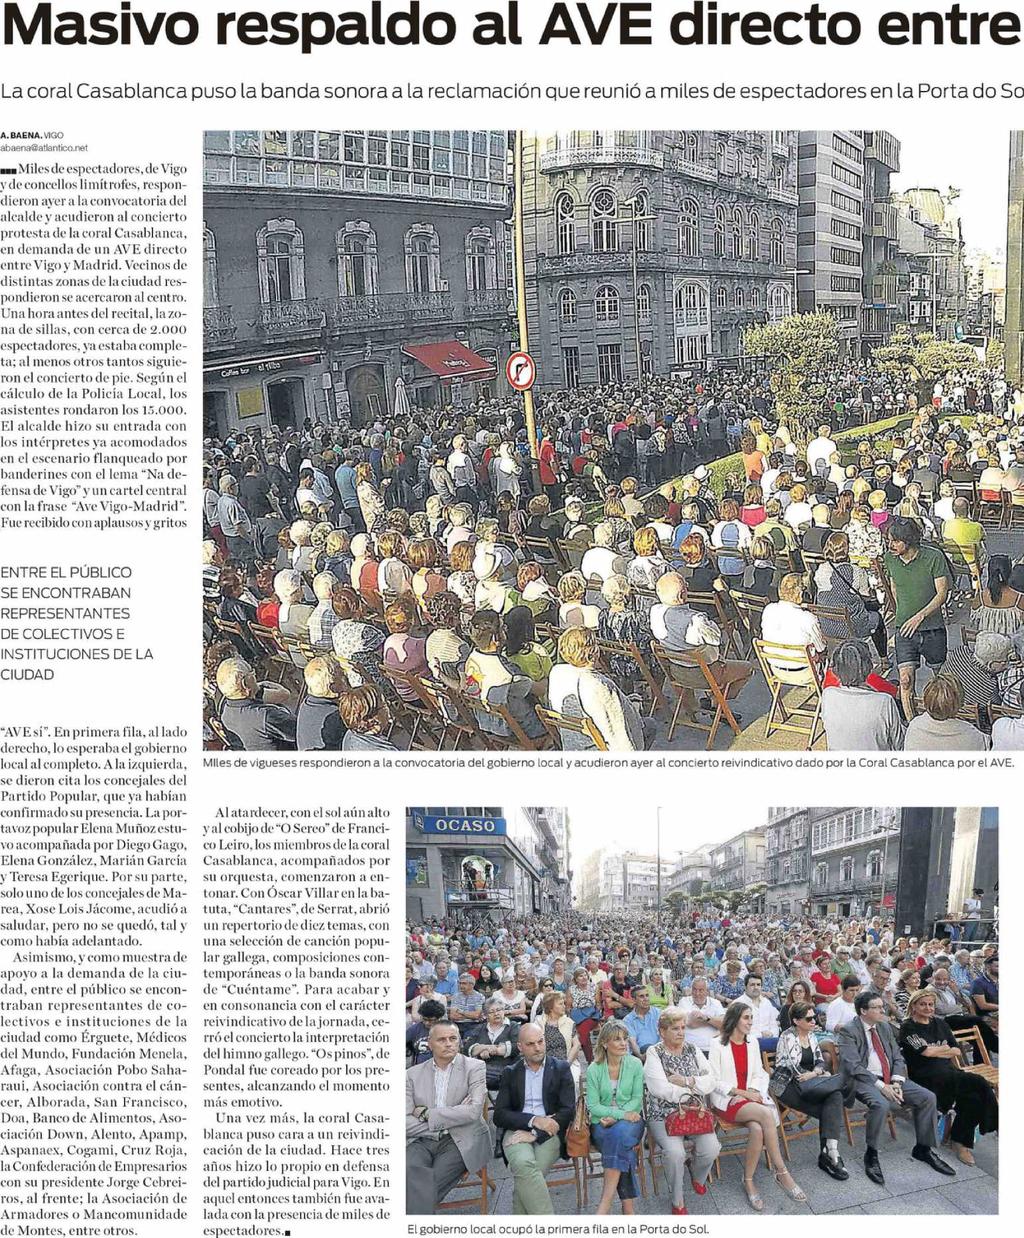 Atlántico Galicia Prensa: Tirada: Difusión: Diaria 3.675 Ejemplares 2.826 Ejemplares Sección: LOCAL Valor: 2.